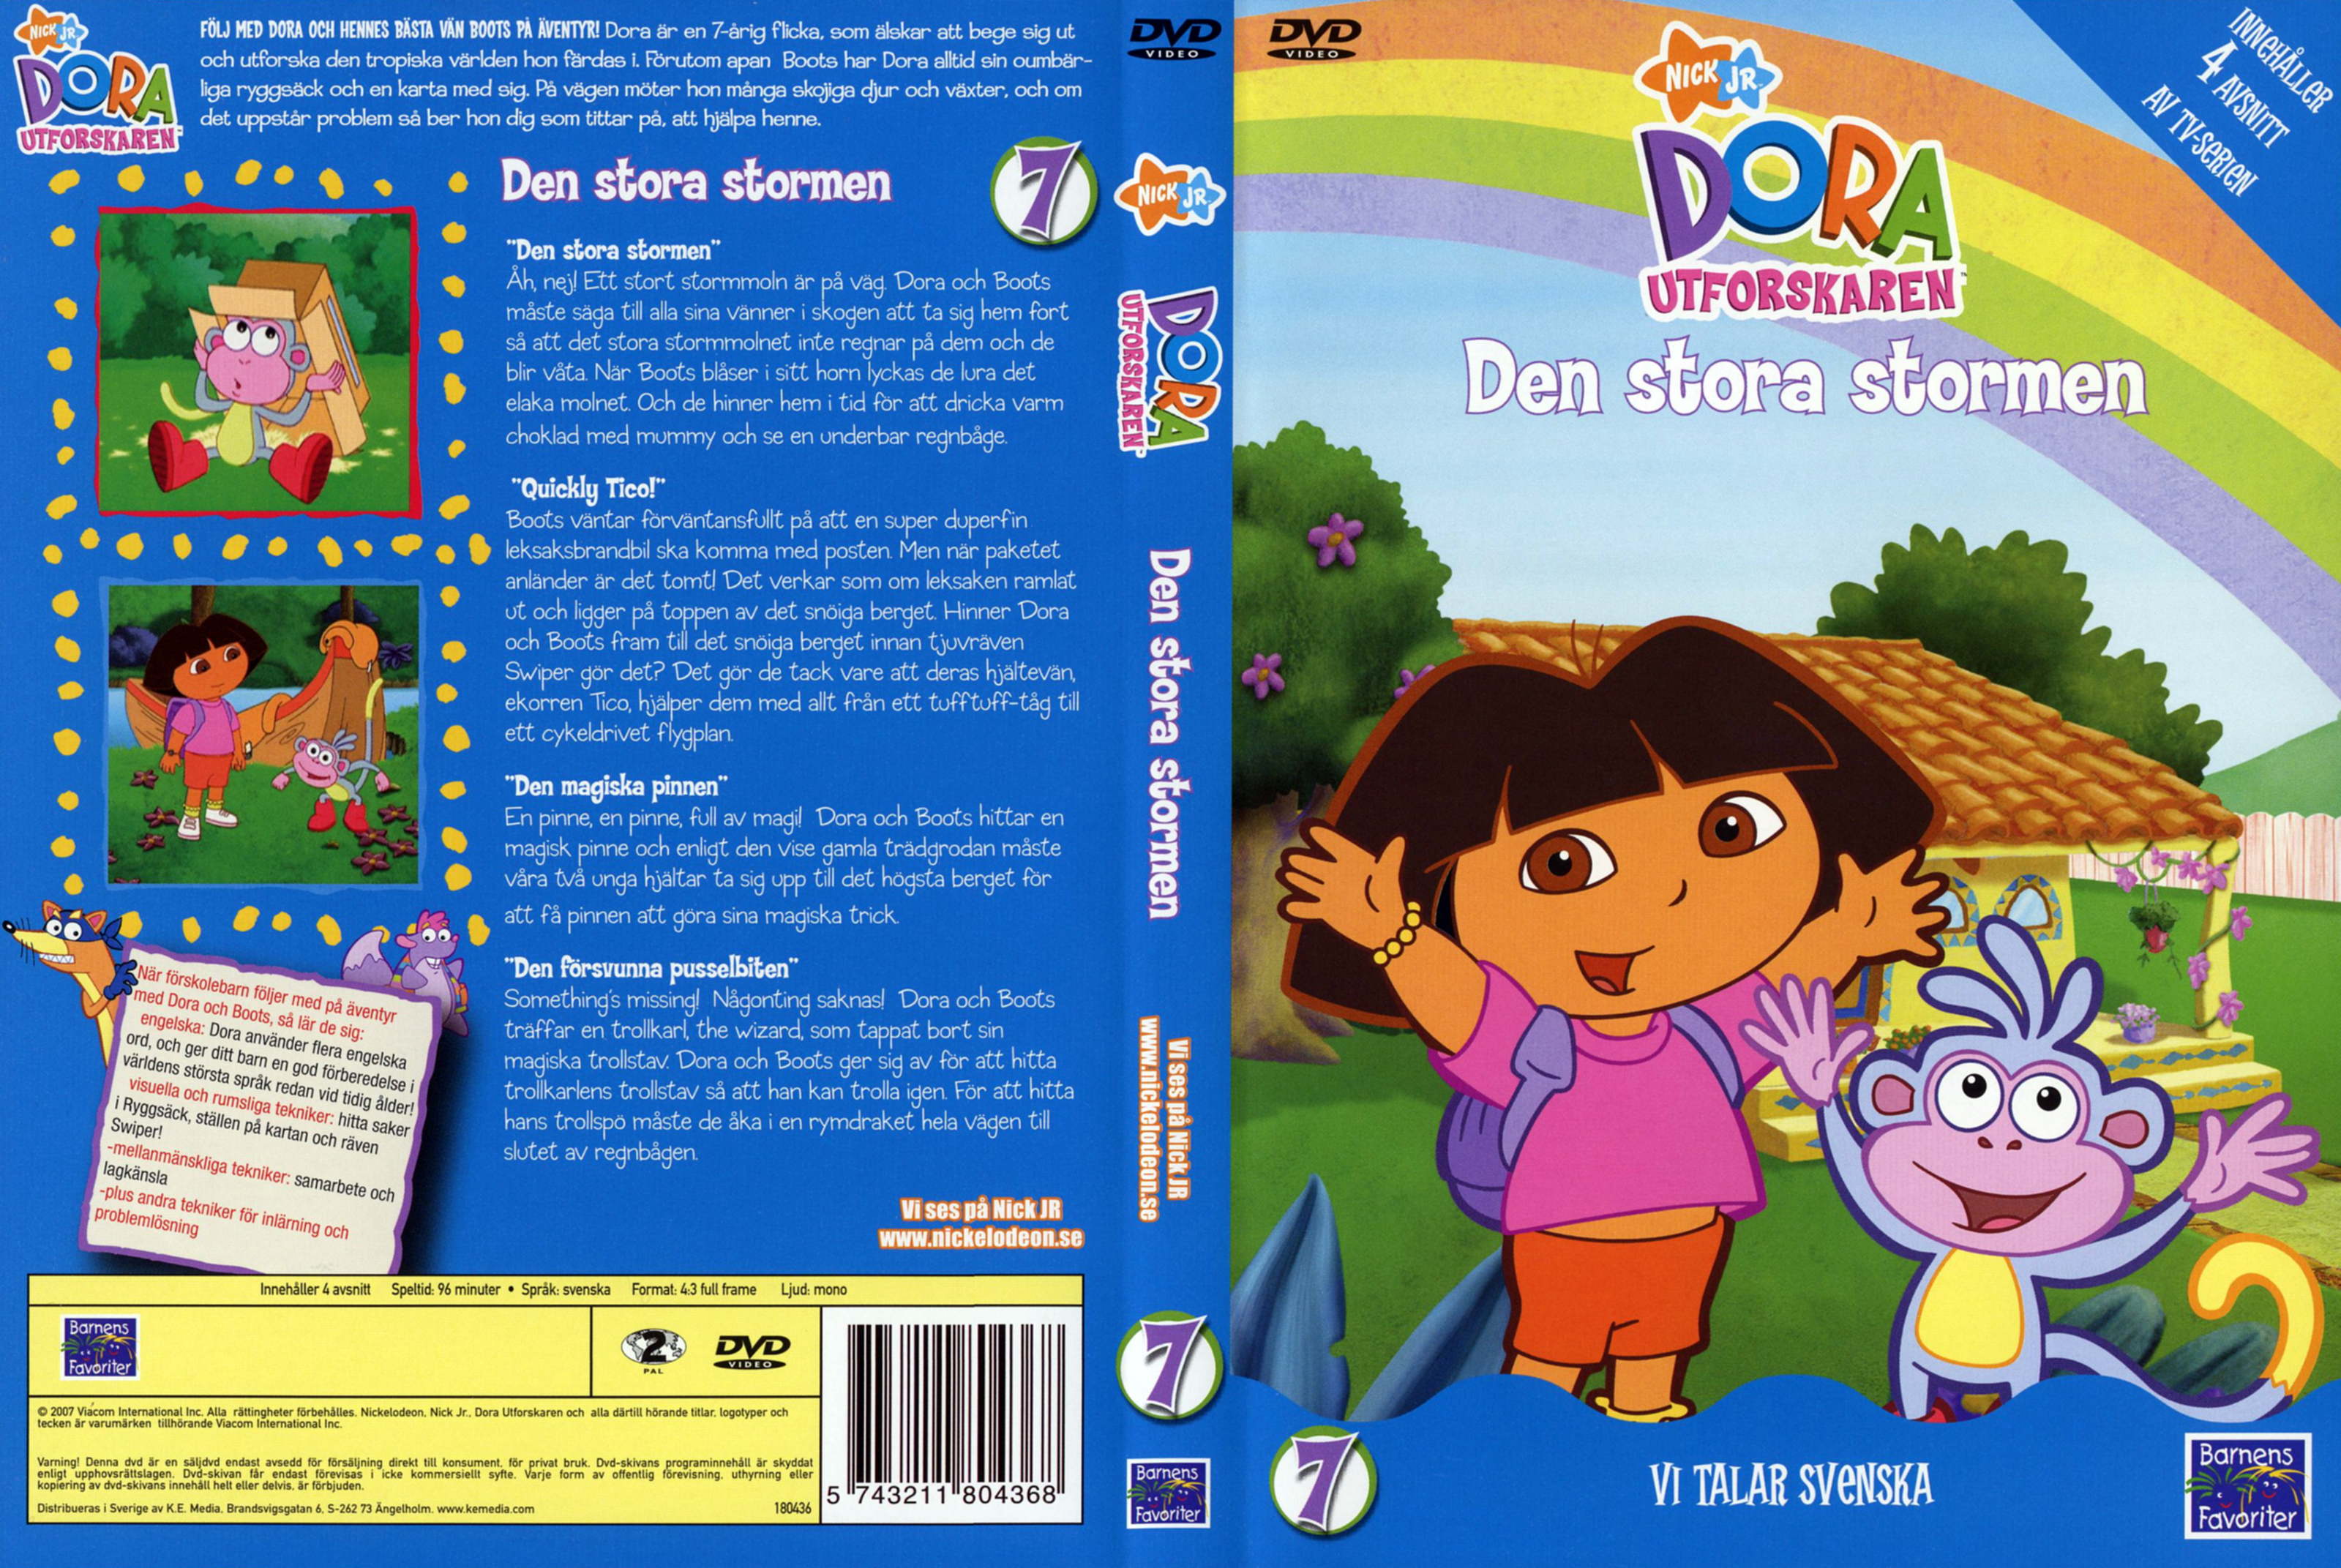 Dora utforskaren - Den stora stormen - front.